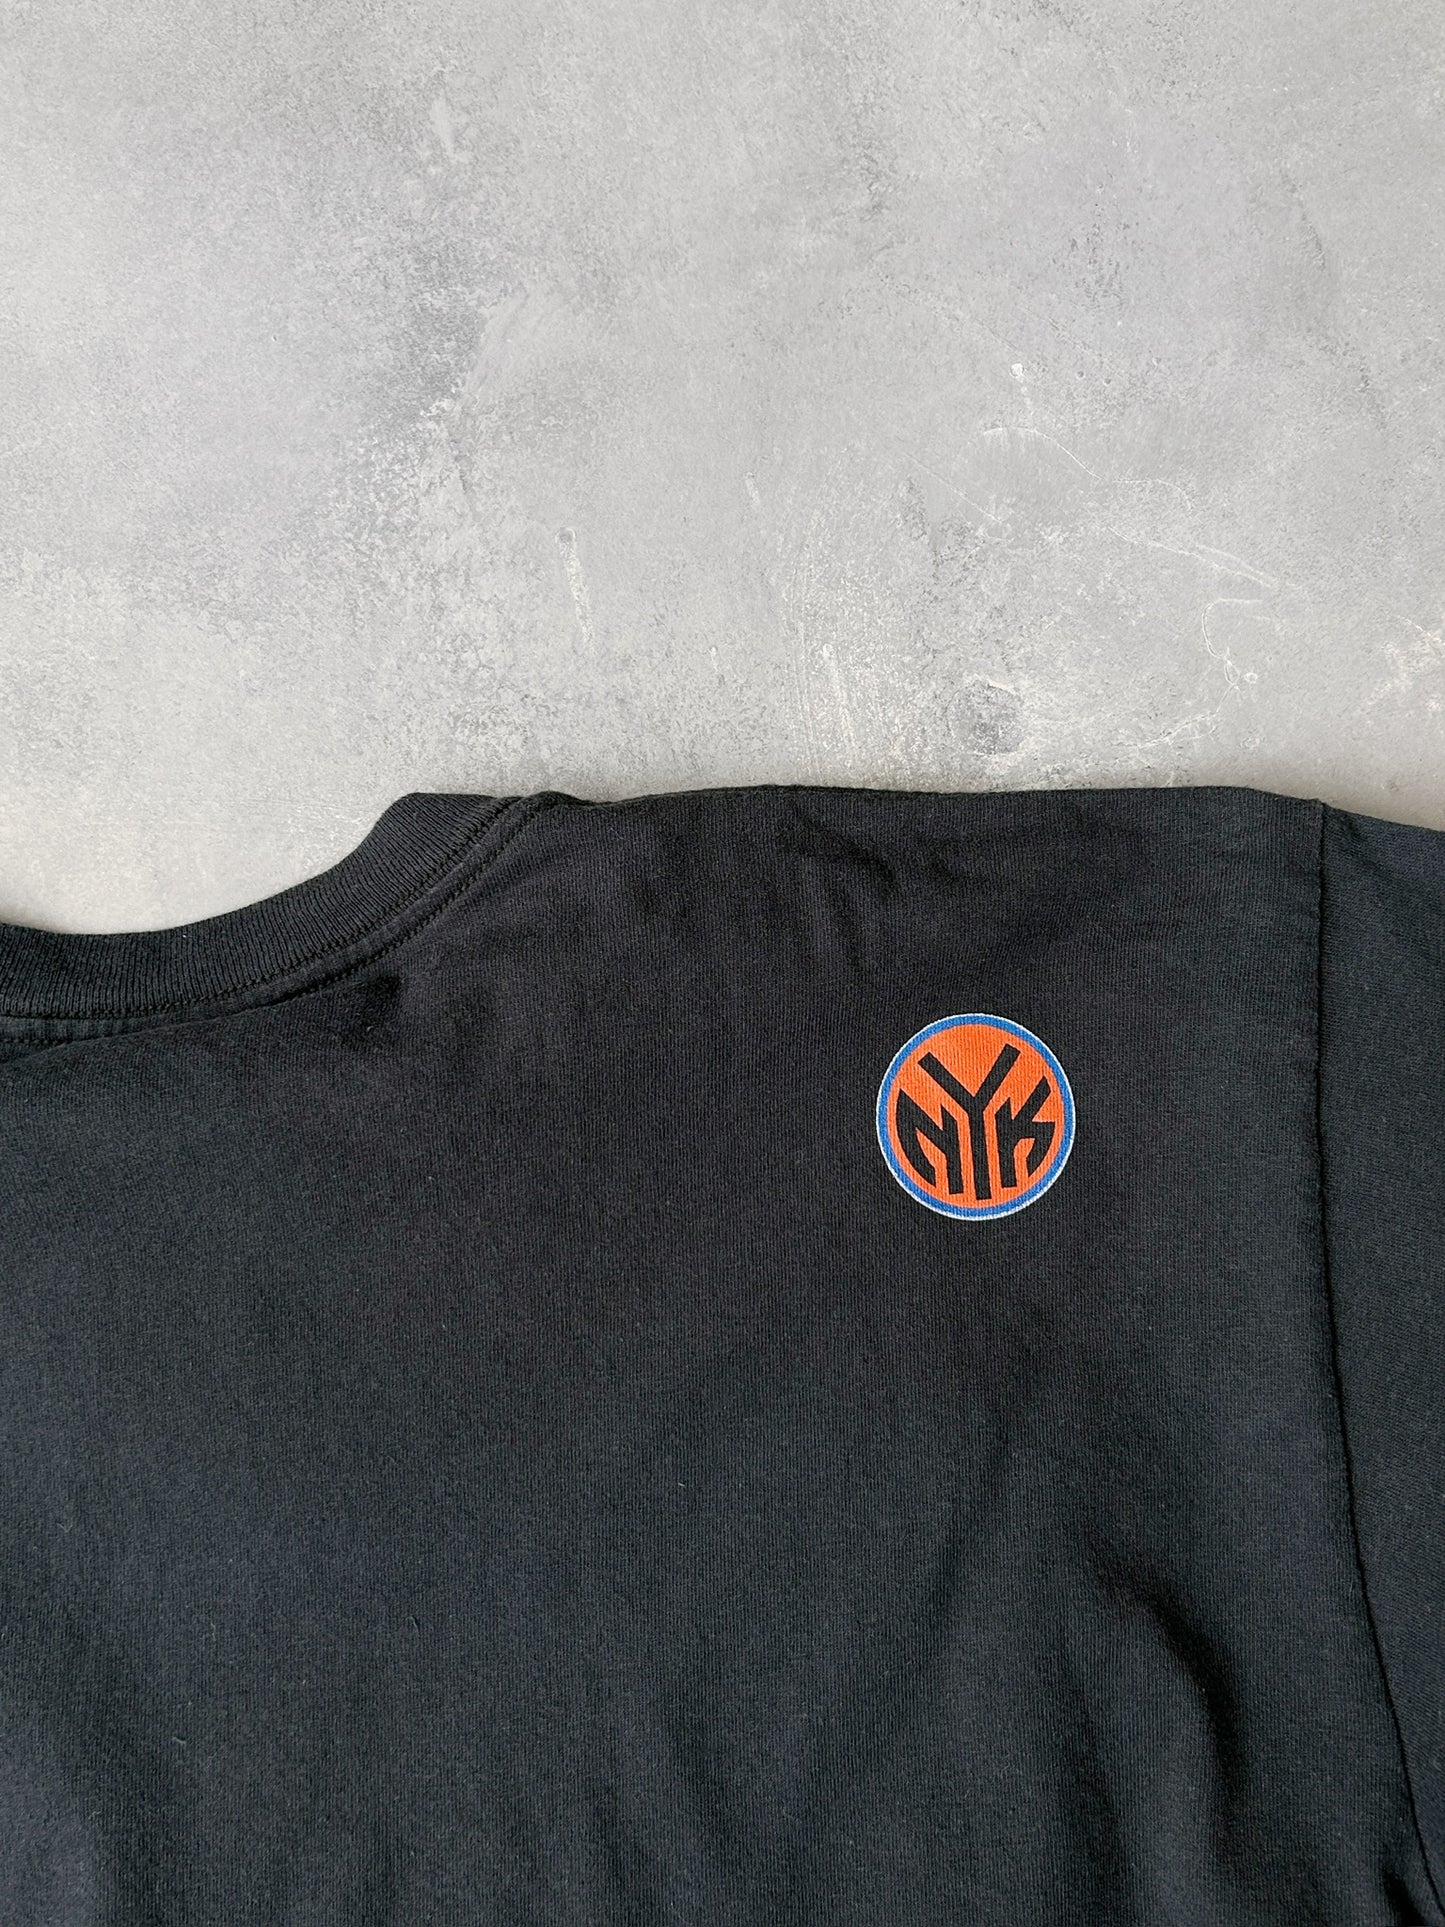 New York Knicks T-Shirt 00's - Large